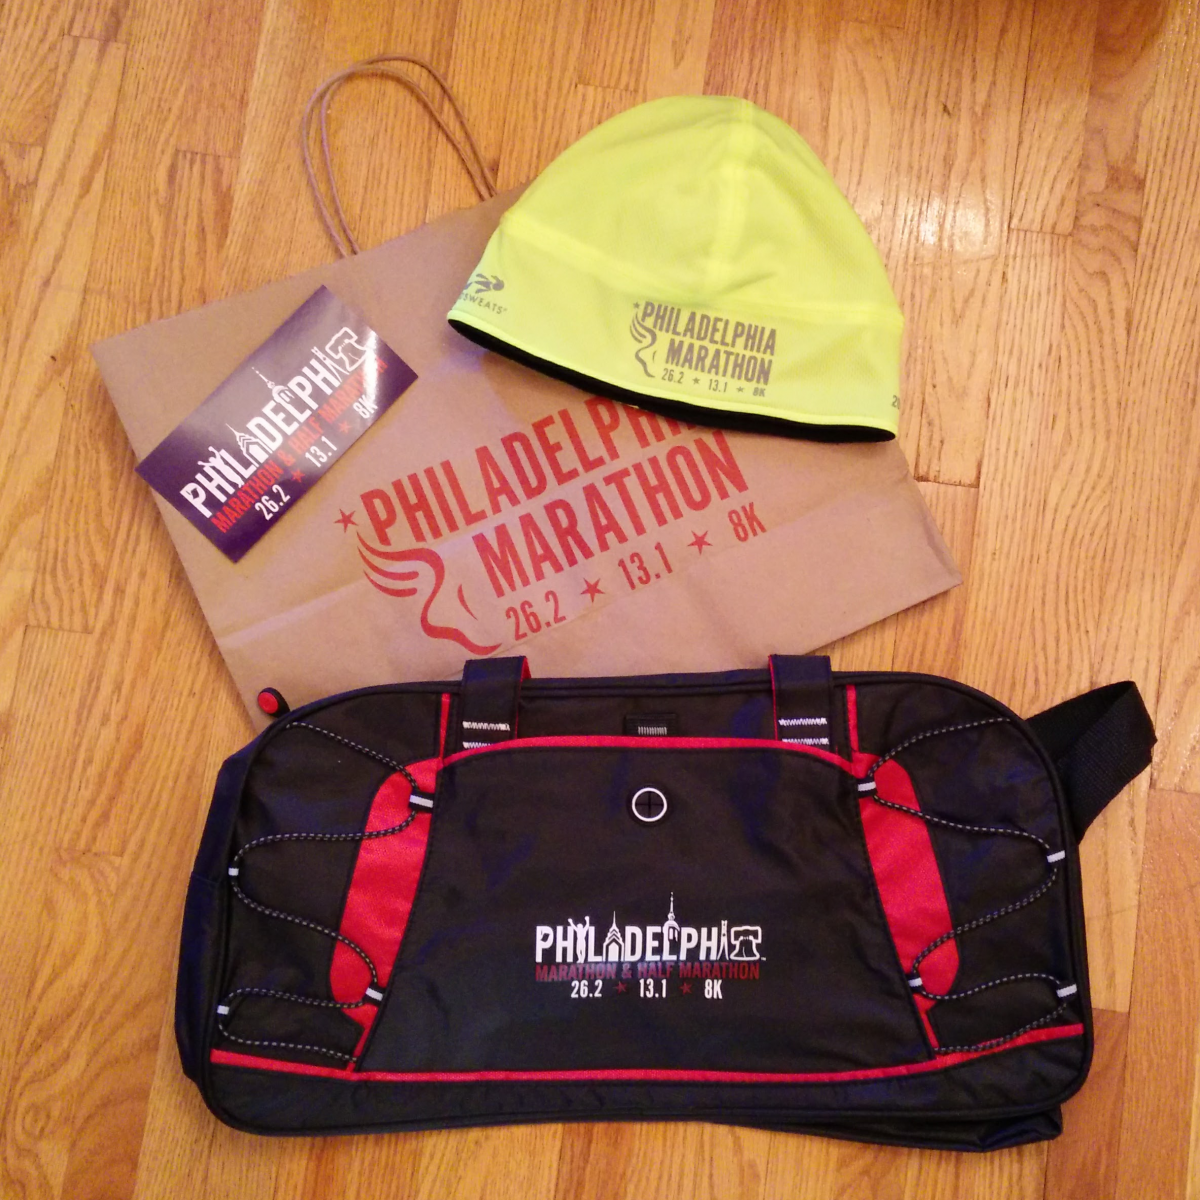 CONTESTS - Like us on Facebook to Win 2016 Philadelphia Marathon Gear!